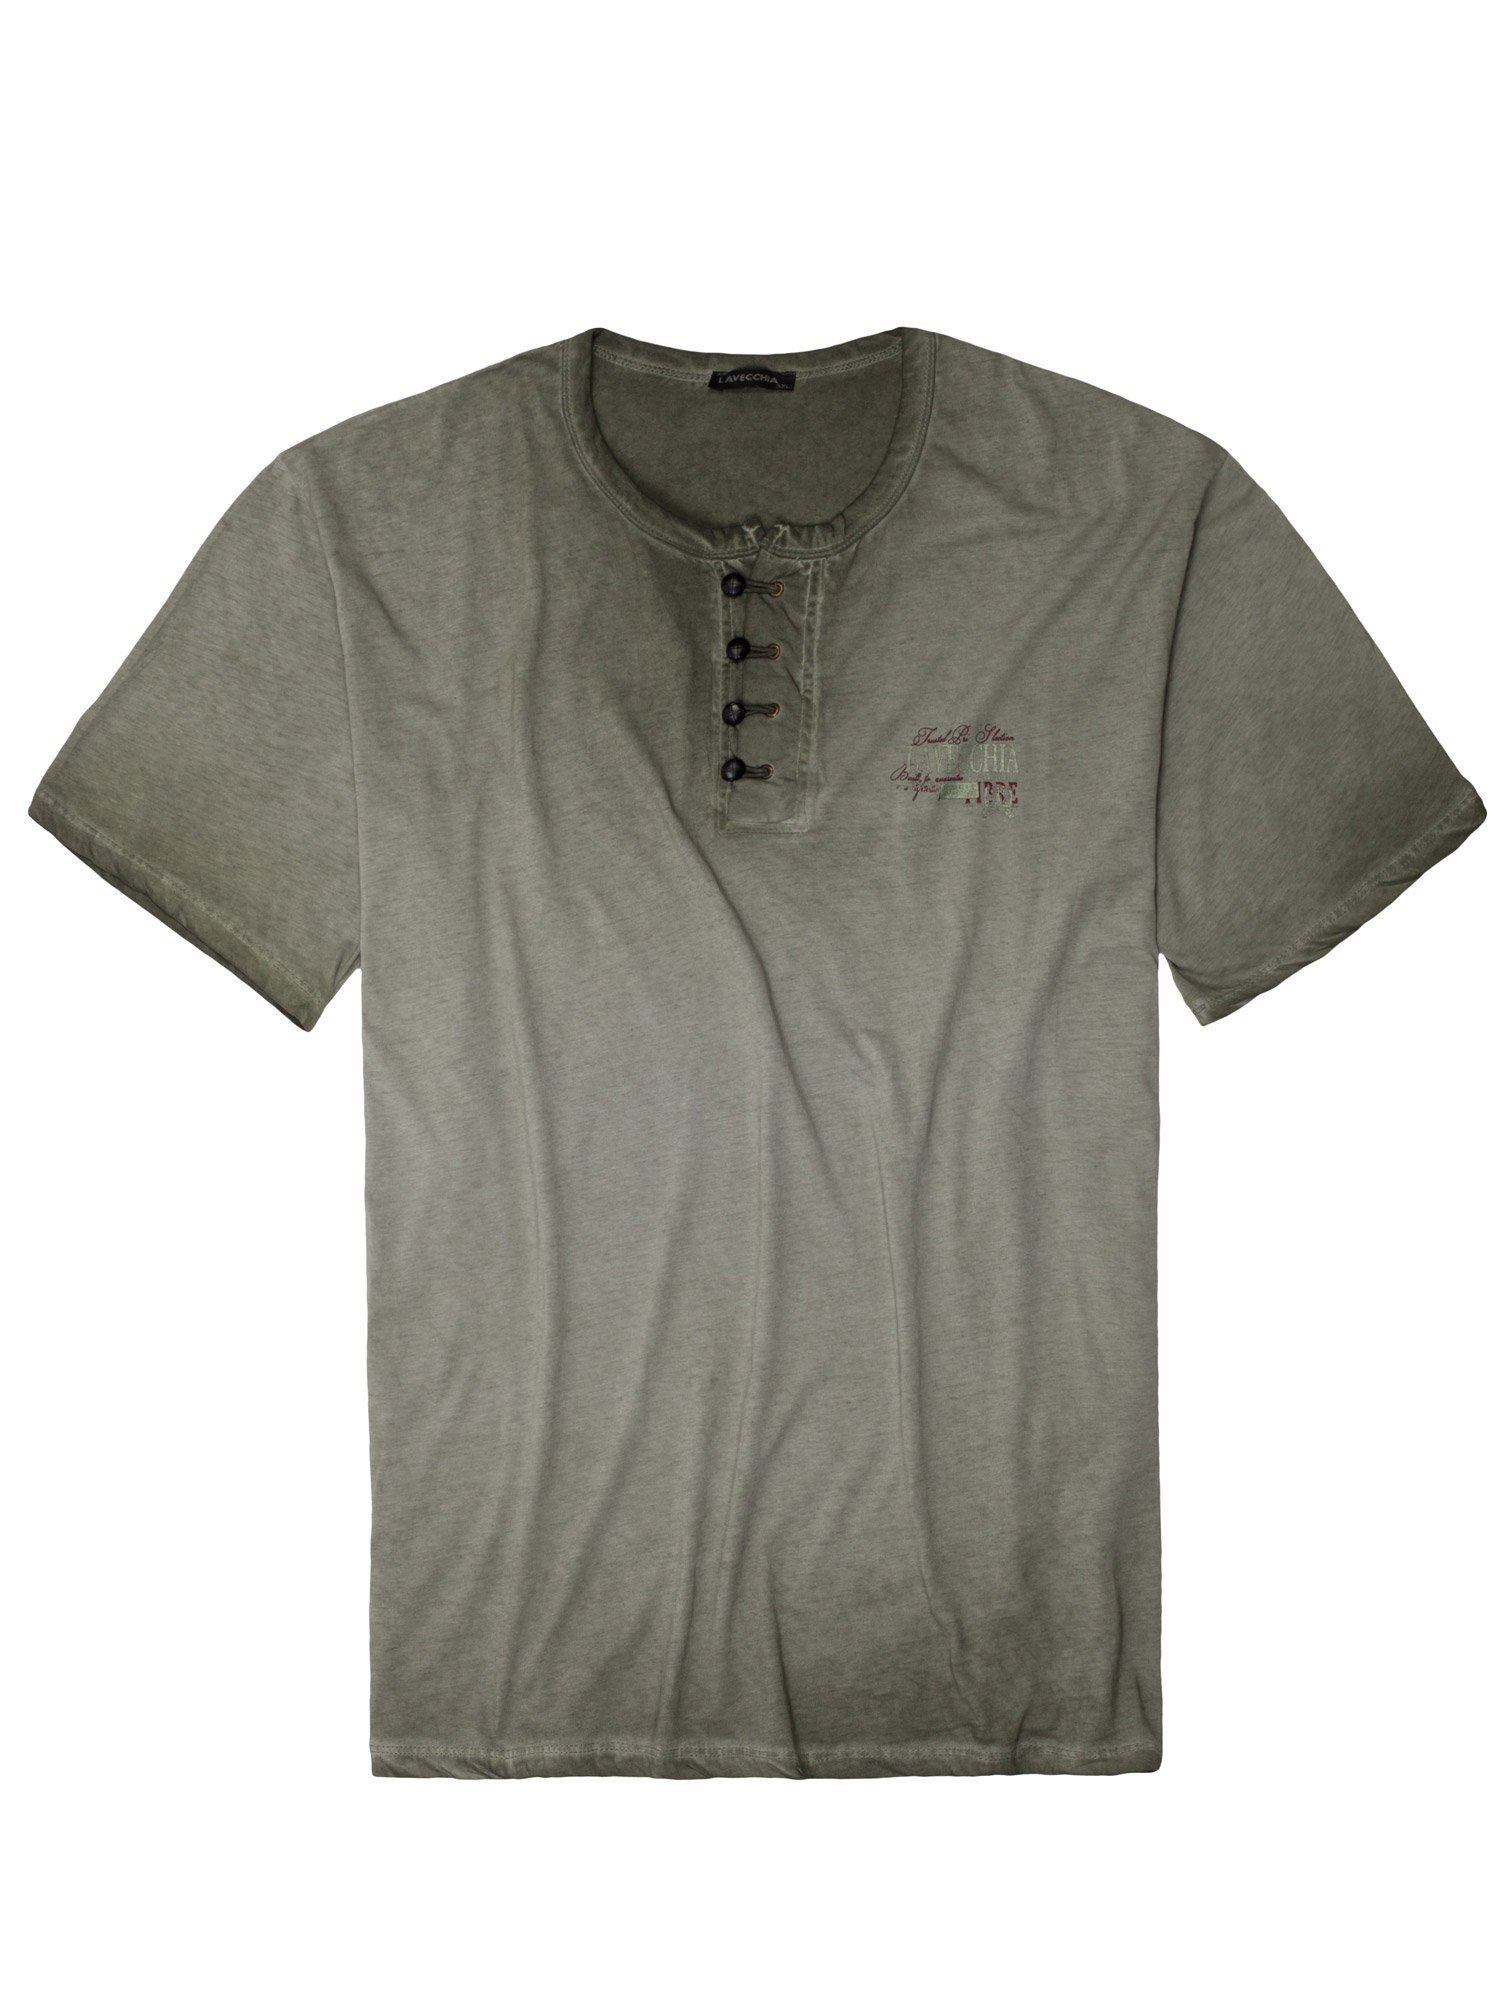 Lavecchia T-Shirt Übergrößen Herren Shirt LV-4055 Herrenshirt Kapuzen Shirt grün